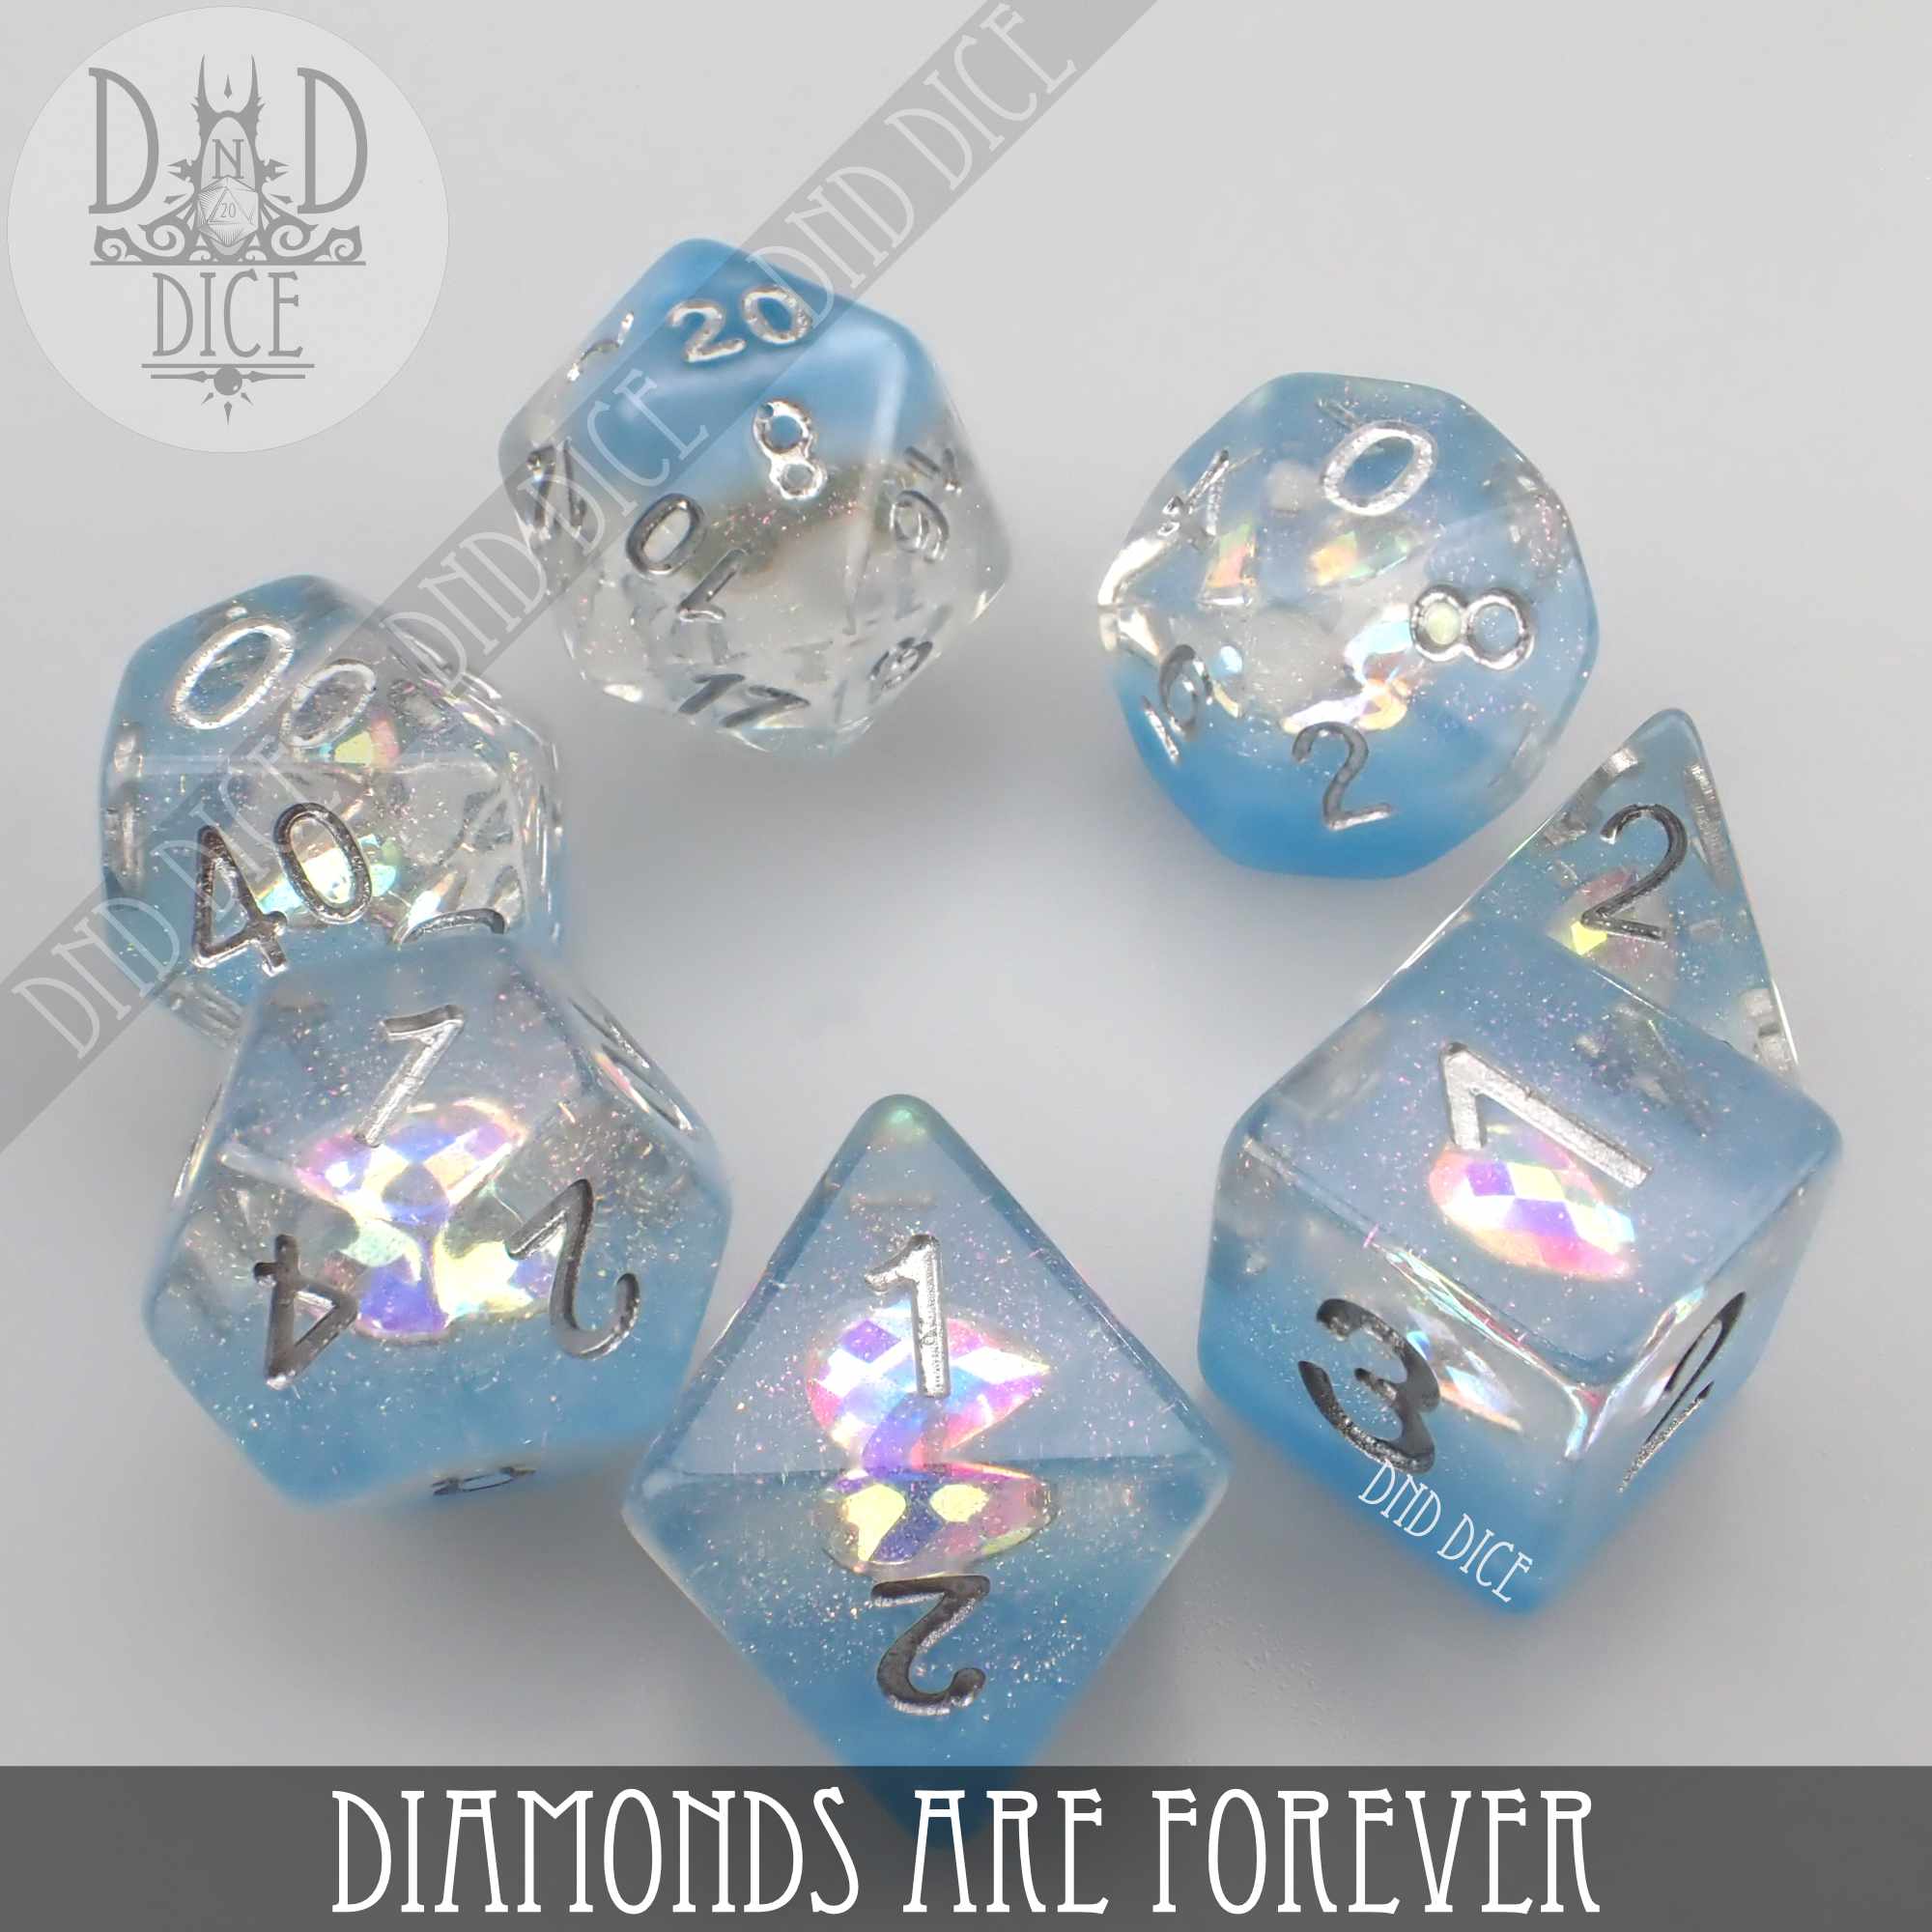 Diamonds are Forever Dice Set